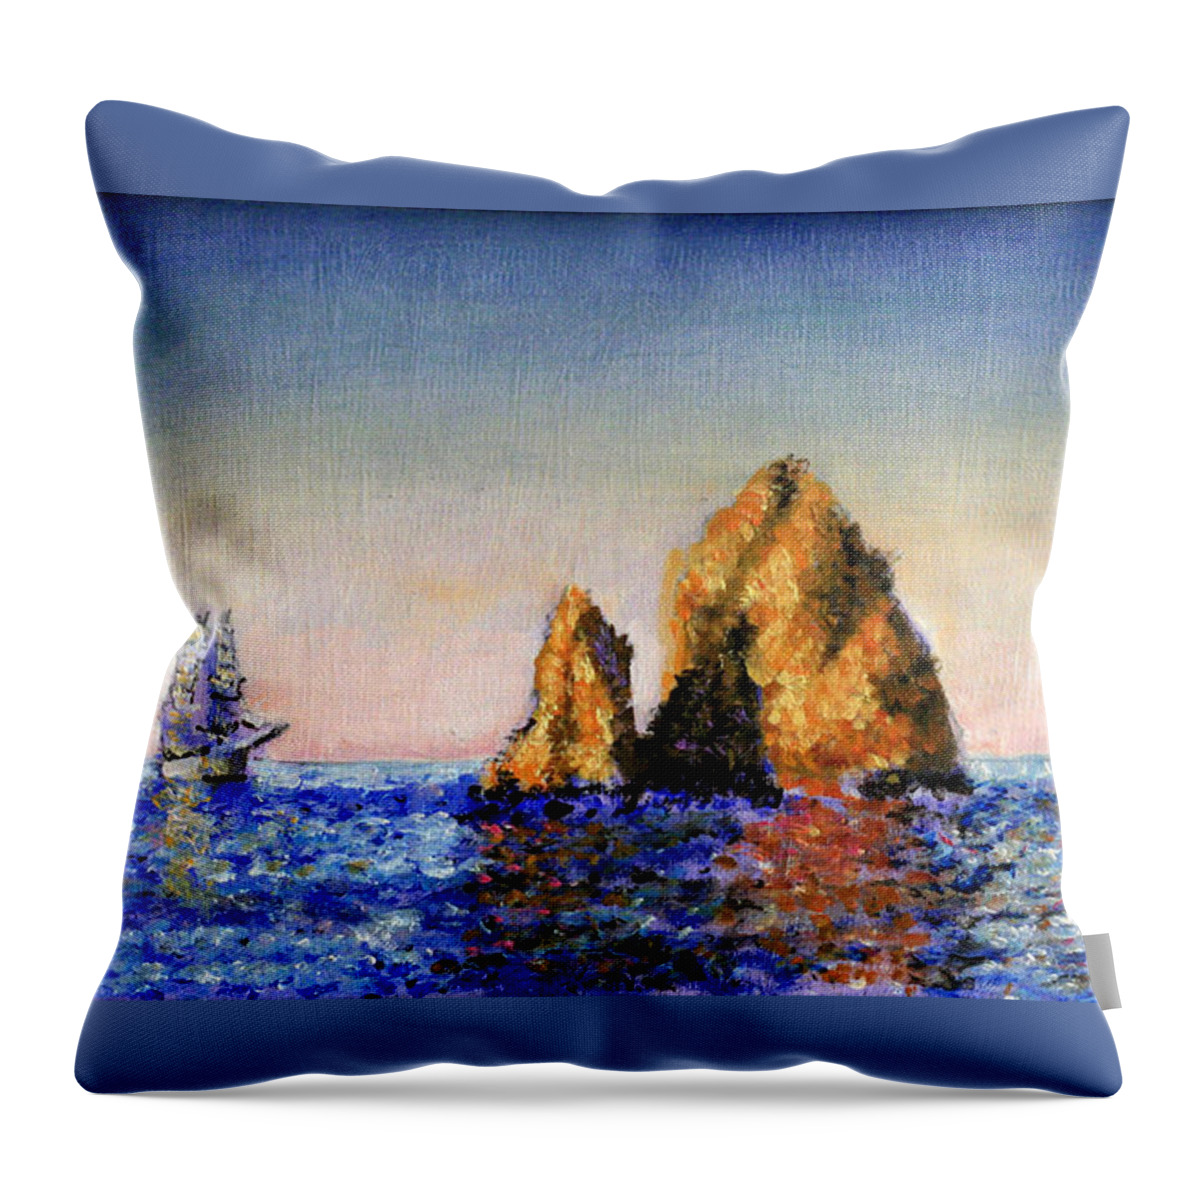 Ocean Throw Pillow featuring the painting Los acantilados de Cabo San Lucas by David Zimmerman